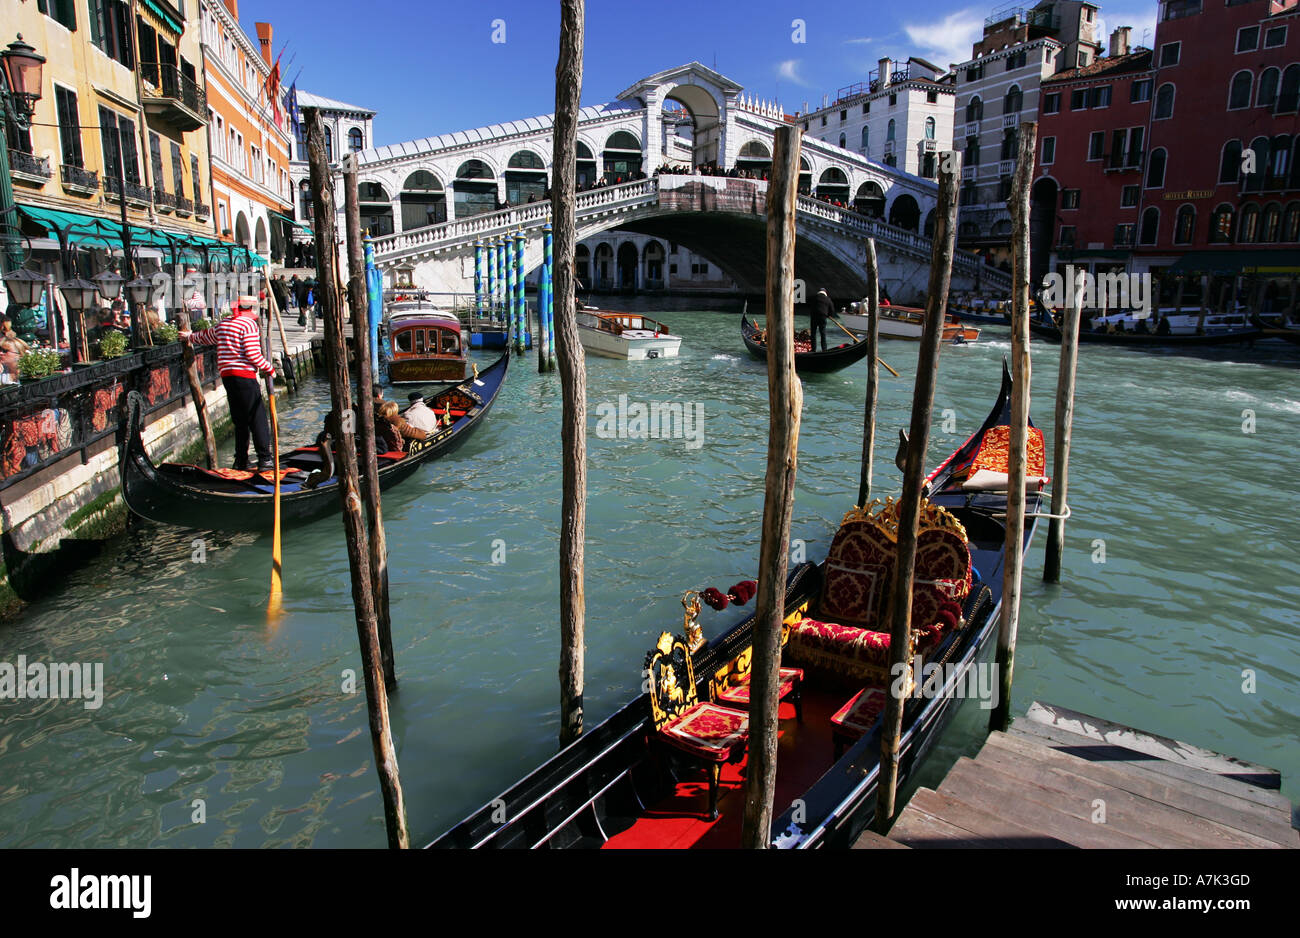 Typical Venice scene as a tourist laiden gondola departs from a cafe near the famous Rialto Bridge Venice Italy Europe EU Stock Photo